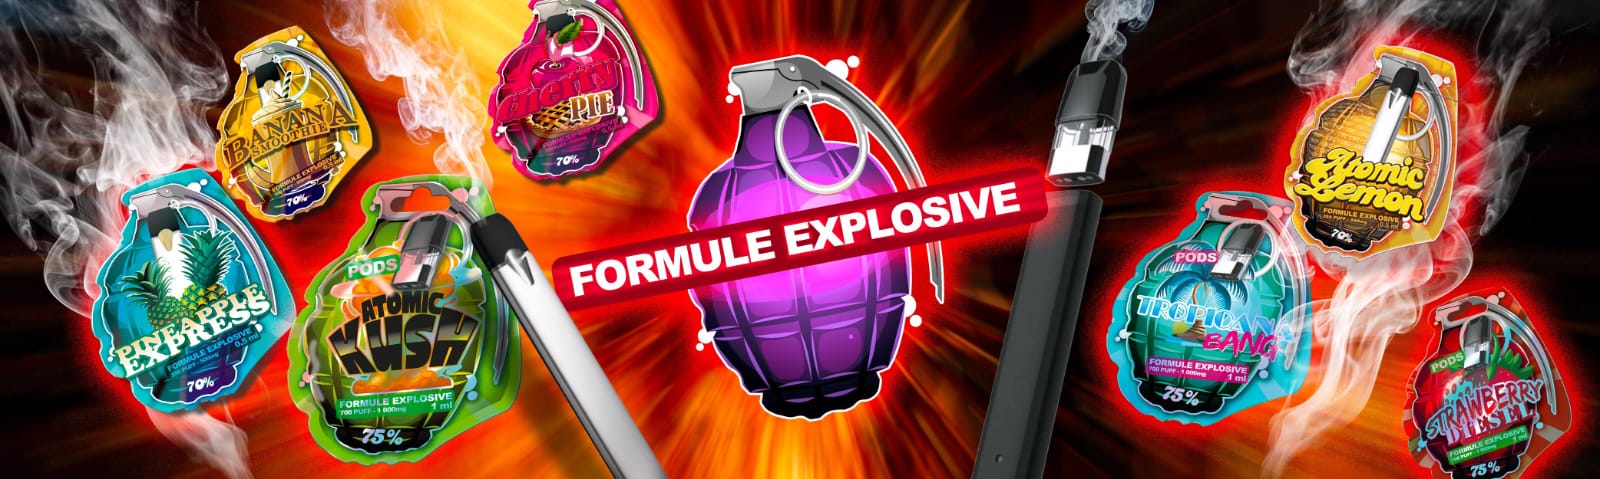 Explosive formula